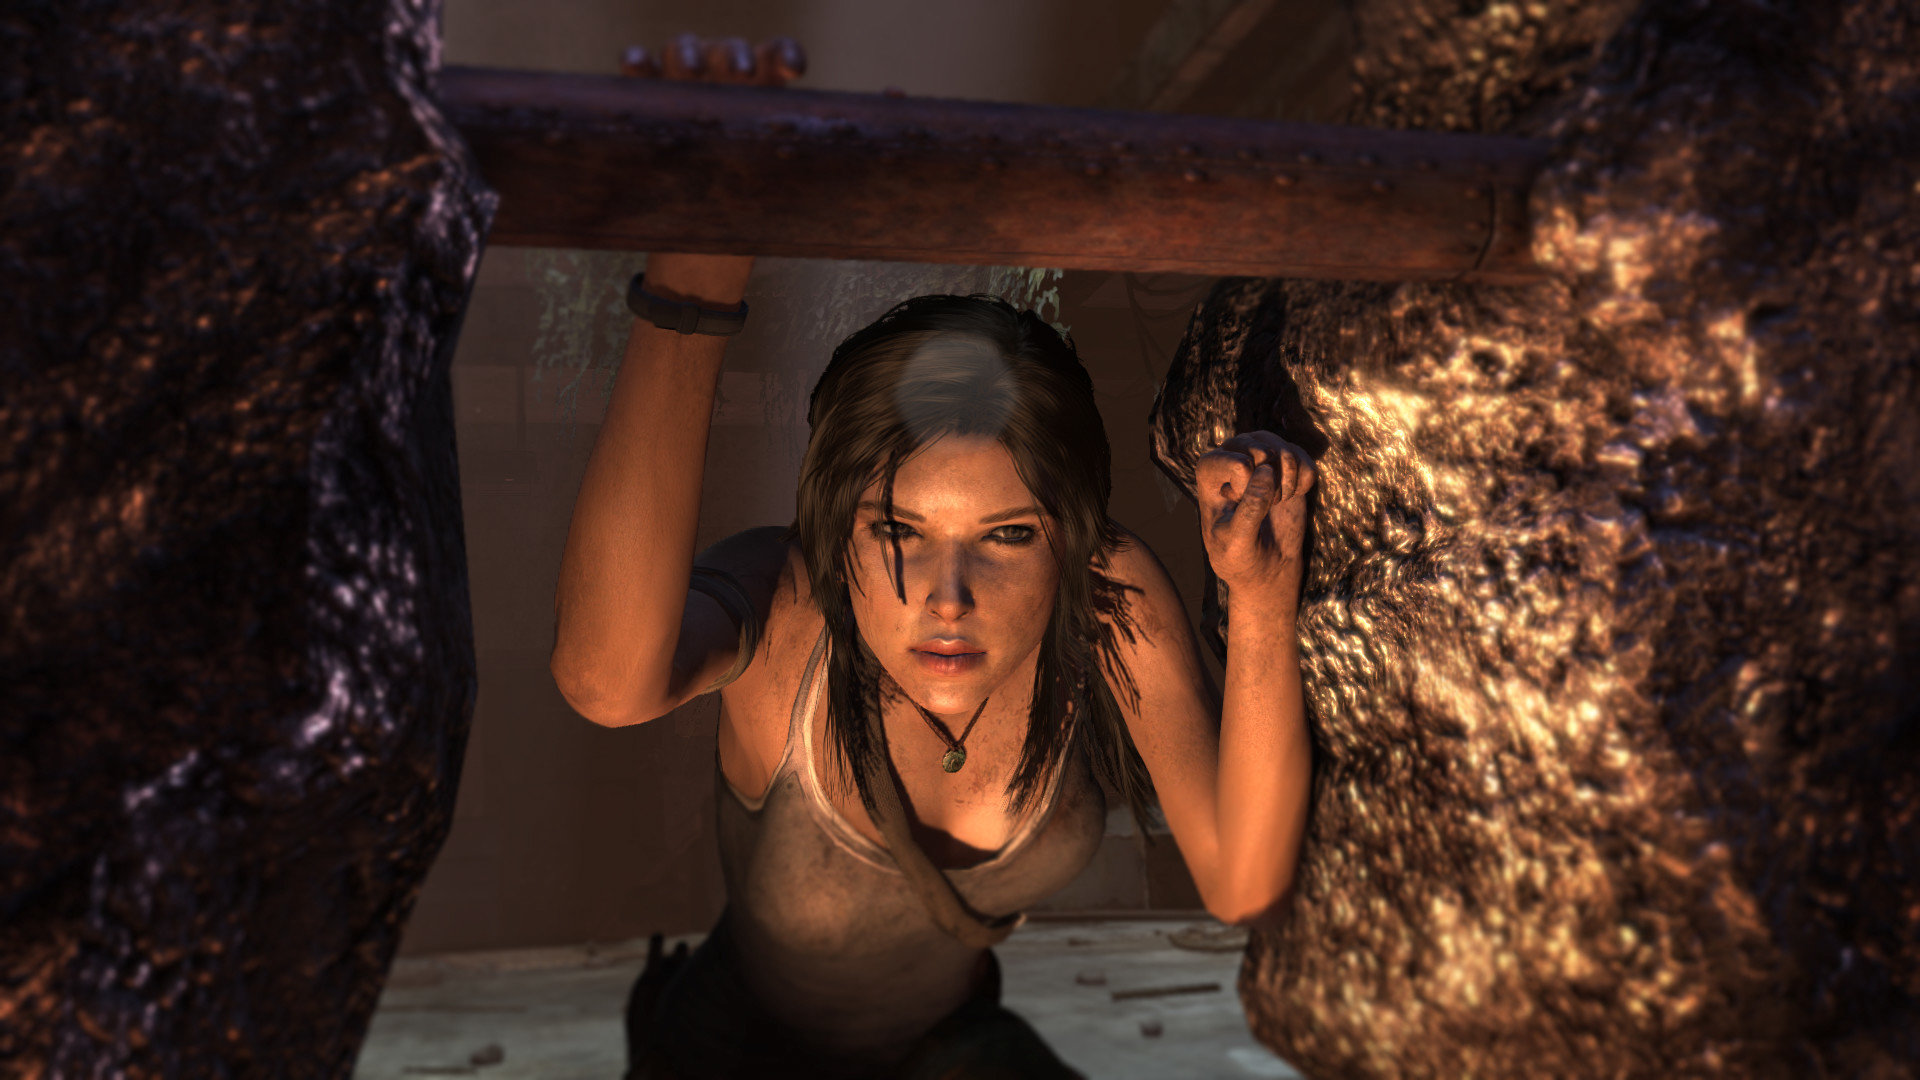 Best Tomb Raider (Lara Croft) wallpaper ID:437159 for High Resolution 1080p computer